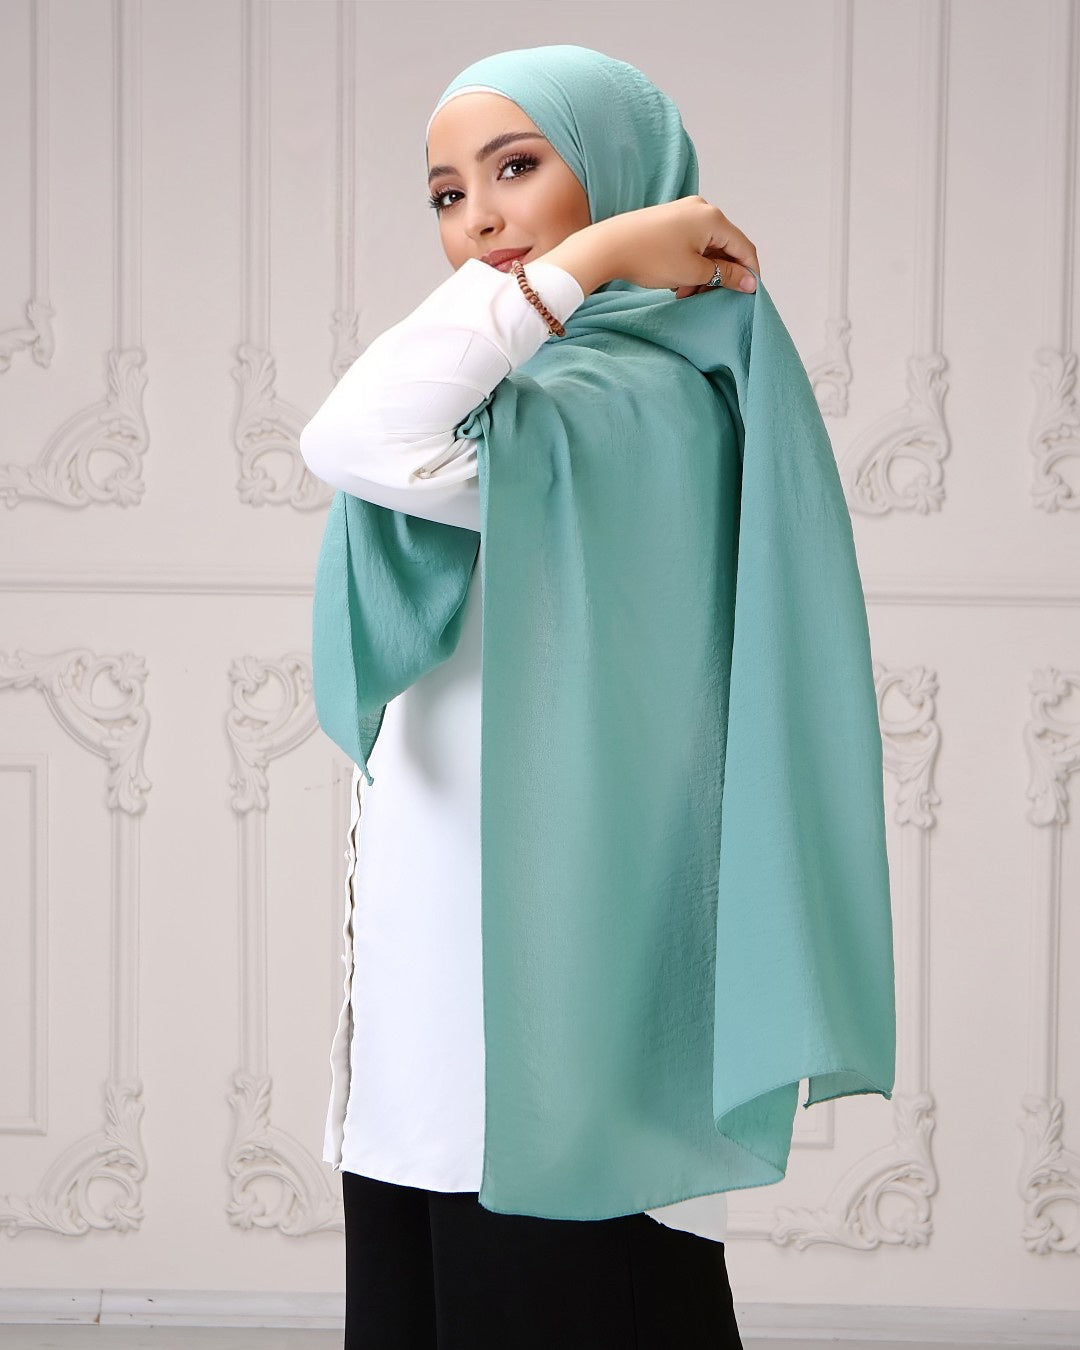 Hijab crinckle crepe verde acqua